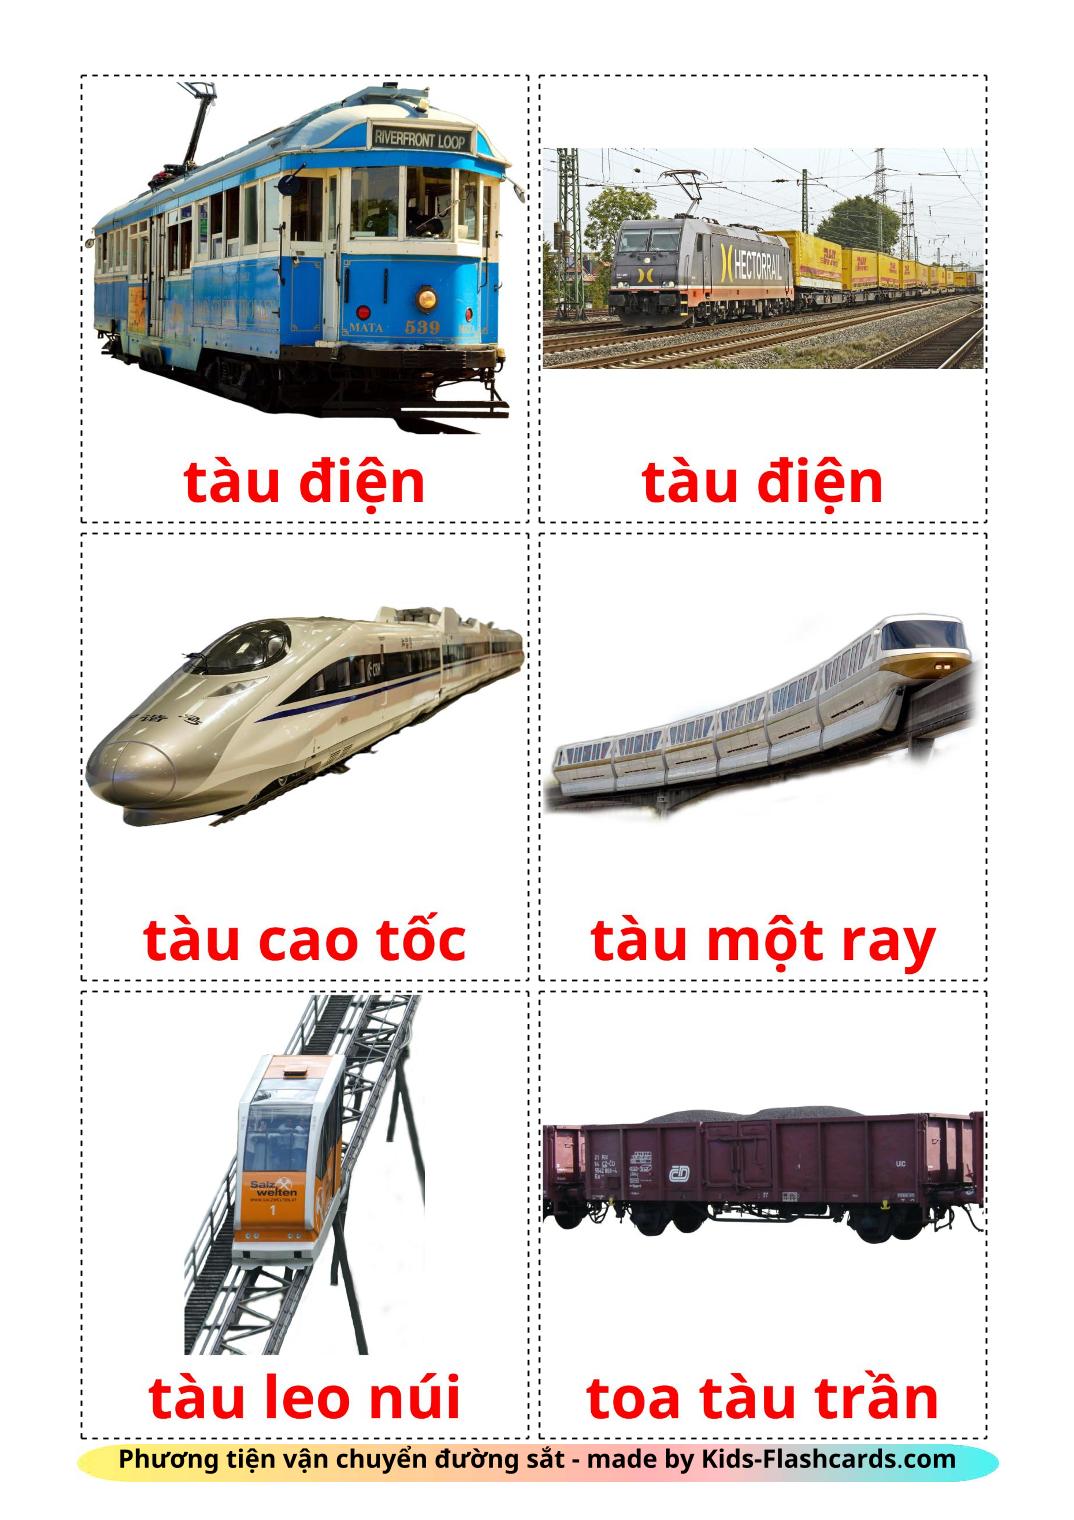 Trasporto ferroviario - 18 flashcards vietnamita stampabili gratuitamente